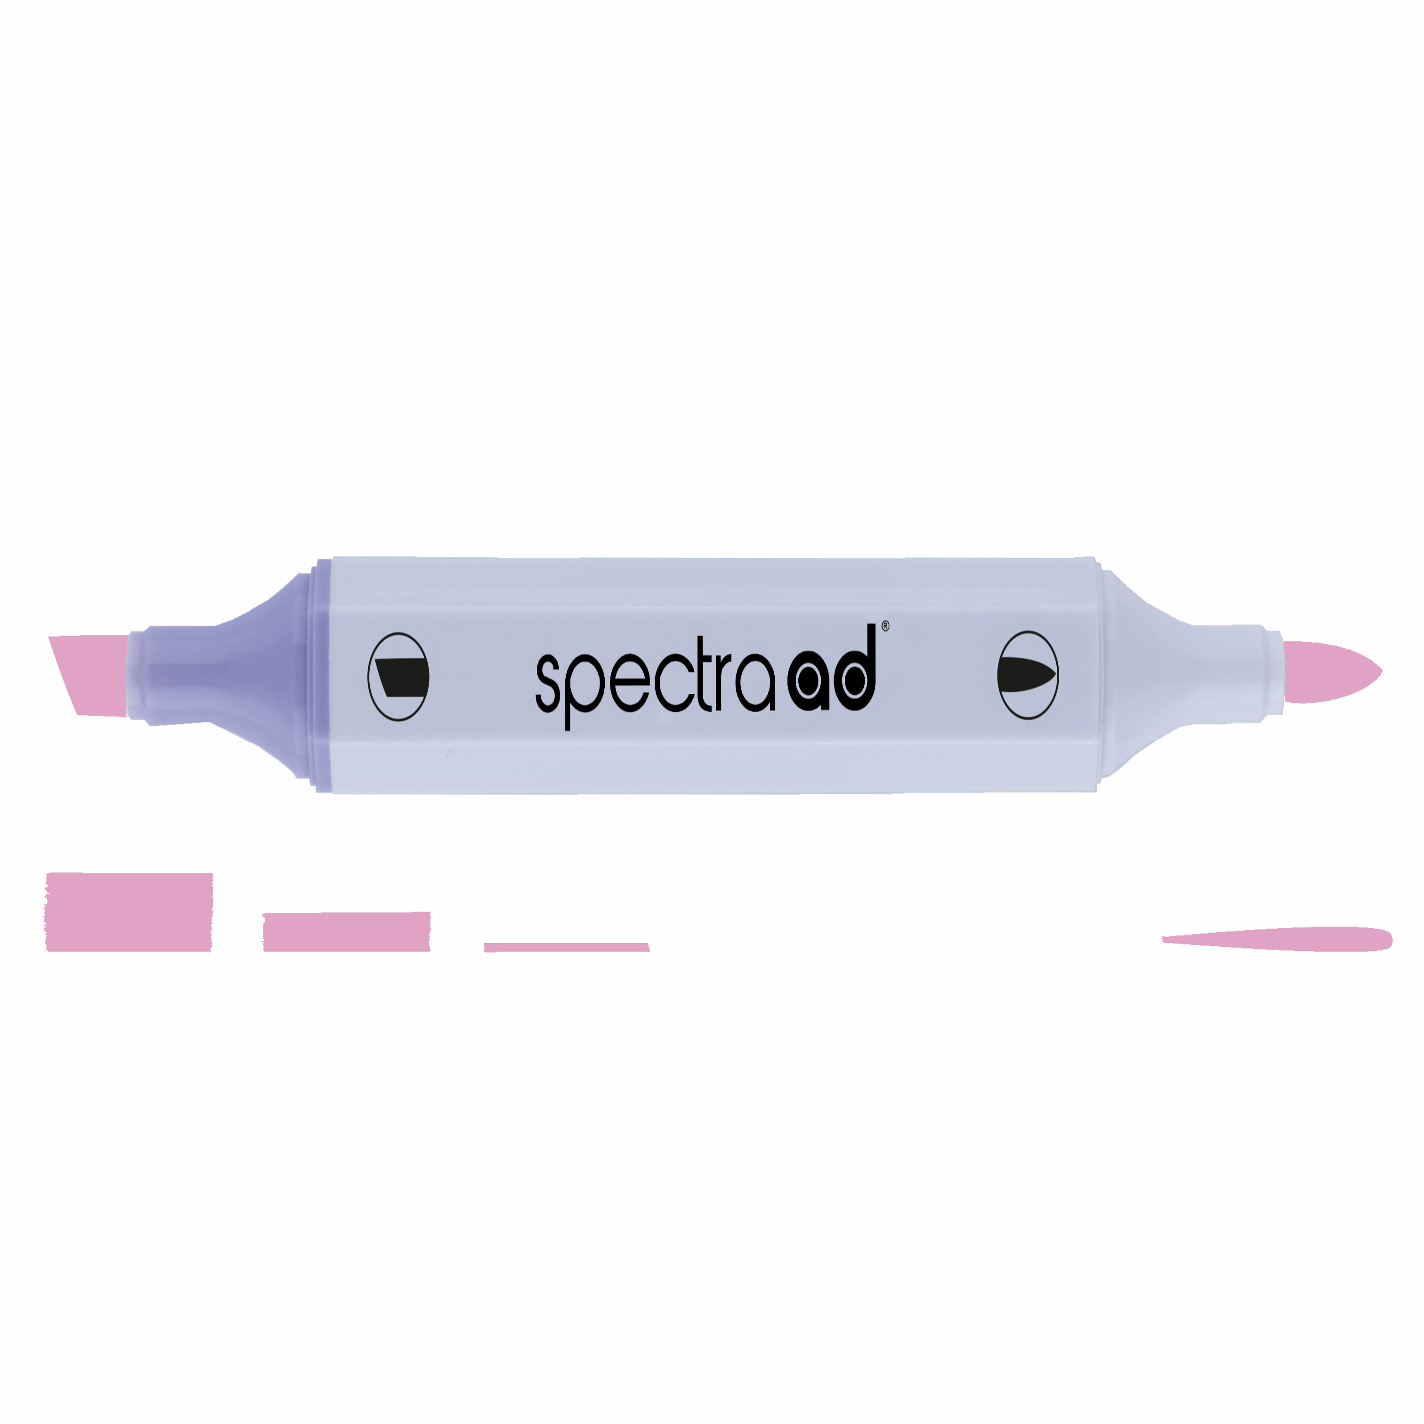 AD Marker Spectra Amaranth Pink